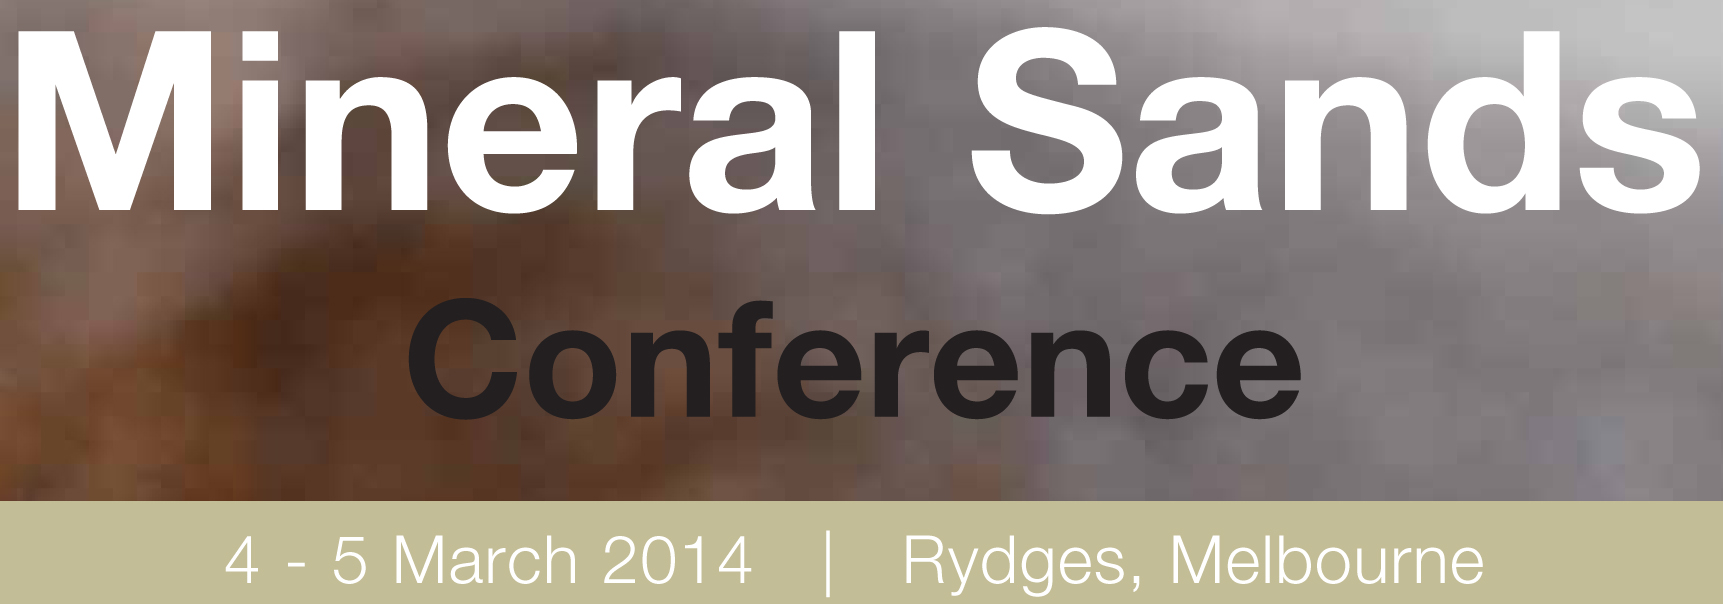 Mineral sands conference